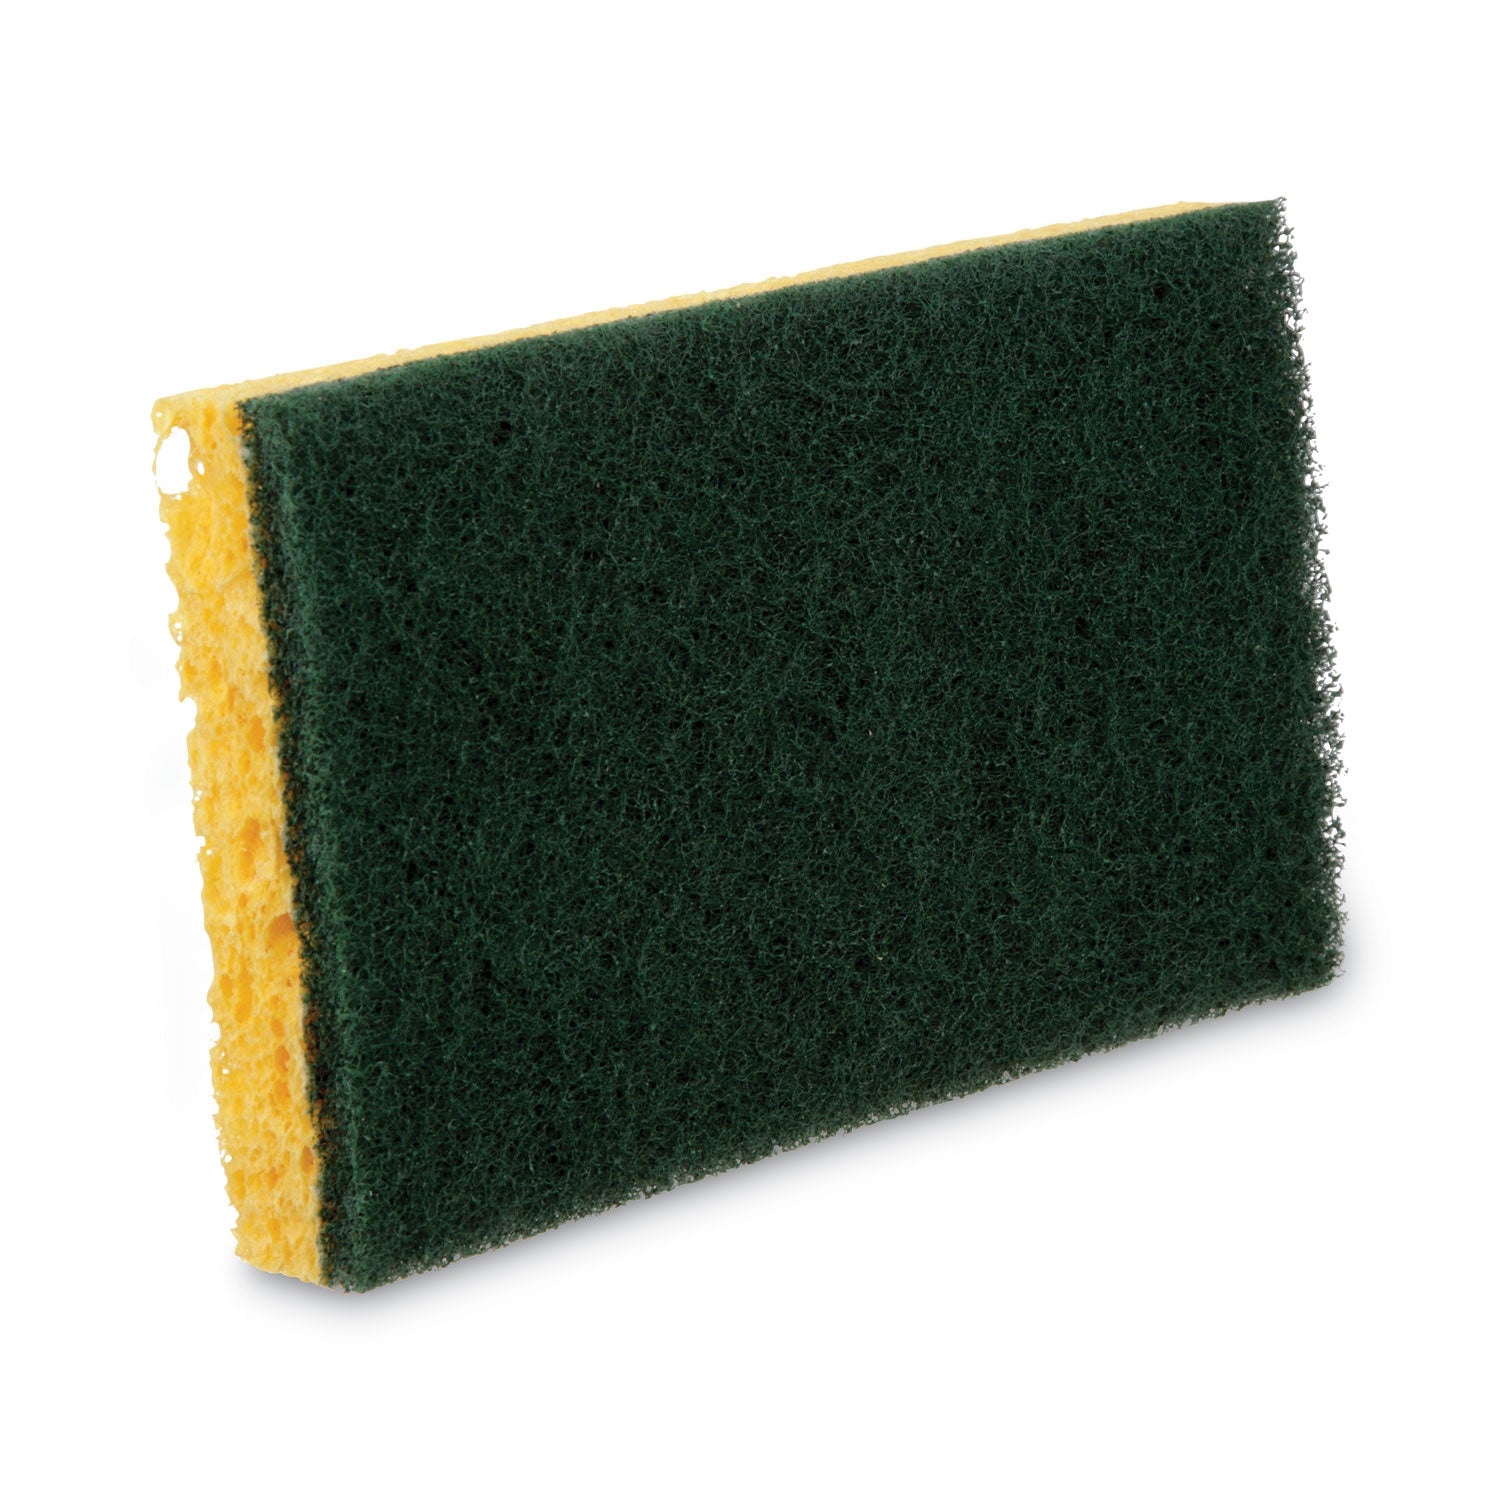 niagara-medium-duty-scrubbing-sponge-74n-36-x-6-1-thick-yellow-green-20-carton_mmm19428 - 3